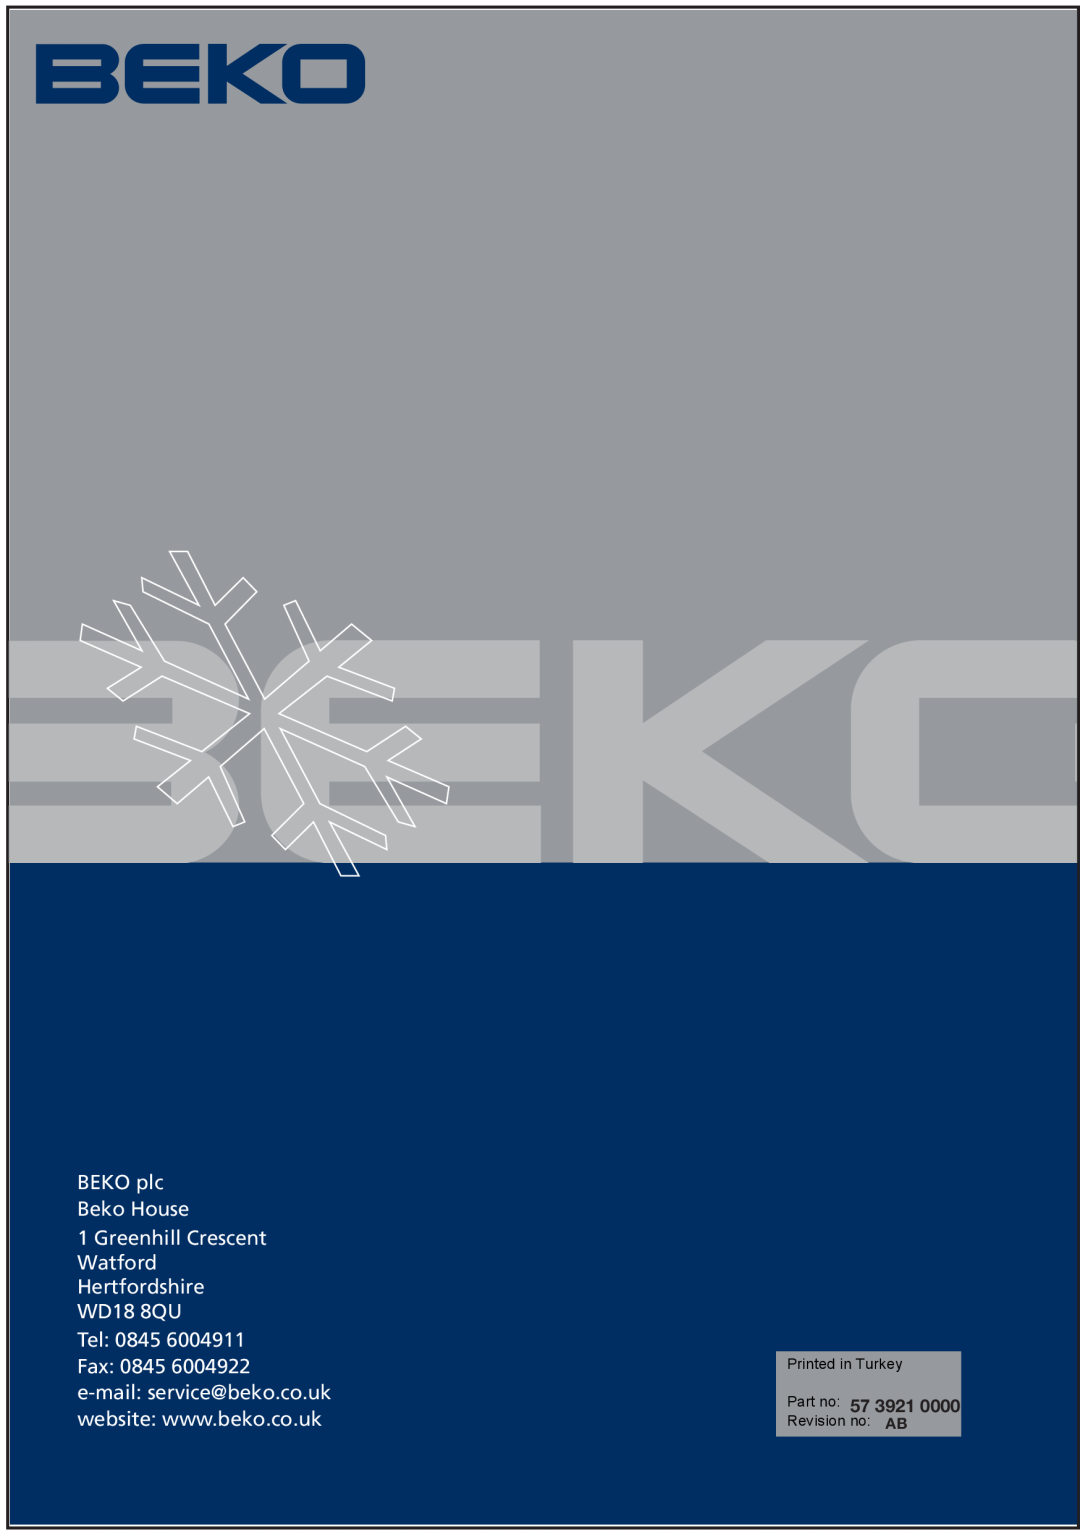 Beko CFMD7852X manual BEKO plc Beko House, Tel 0845 Fax 0845 e-mail service@beko.co.uk, Revision no AB 